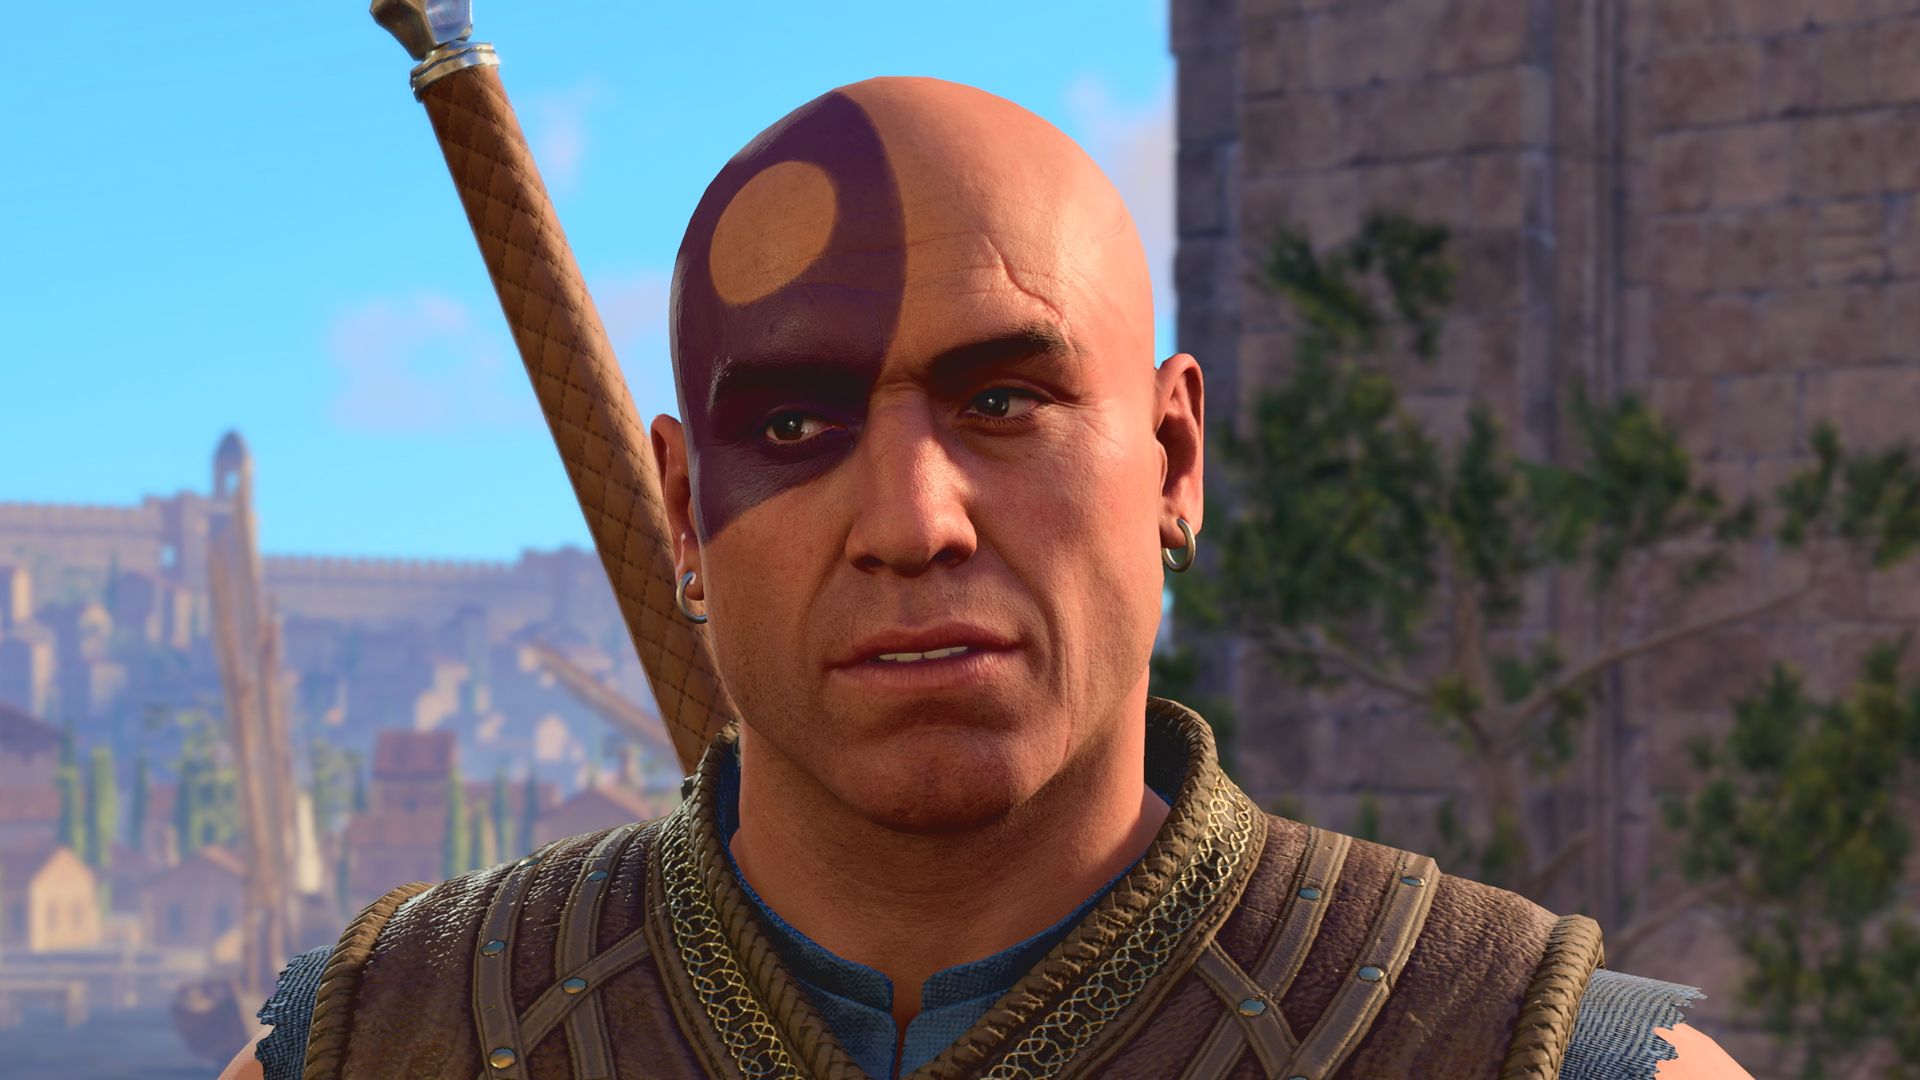 Baldur's Gate 3 Will Feature Cross-Saves Between Xbox, PS5 & PC